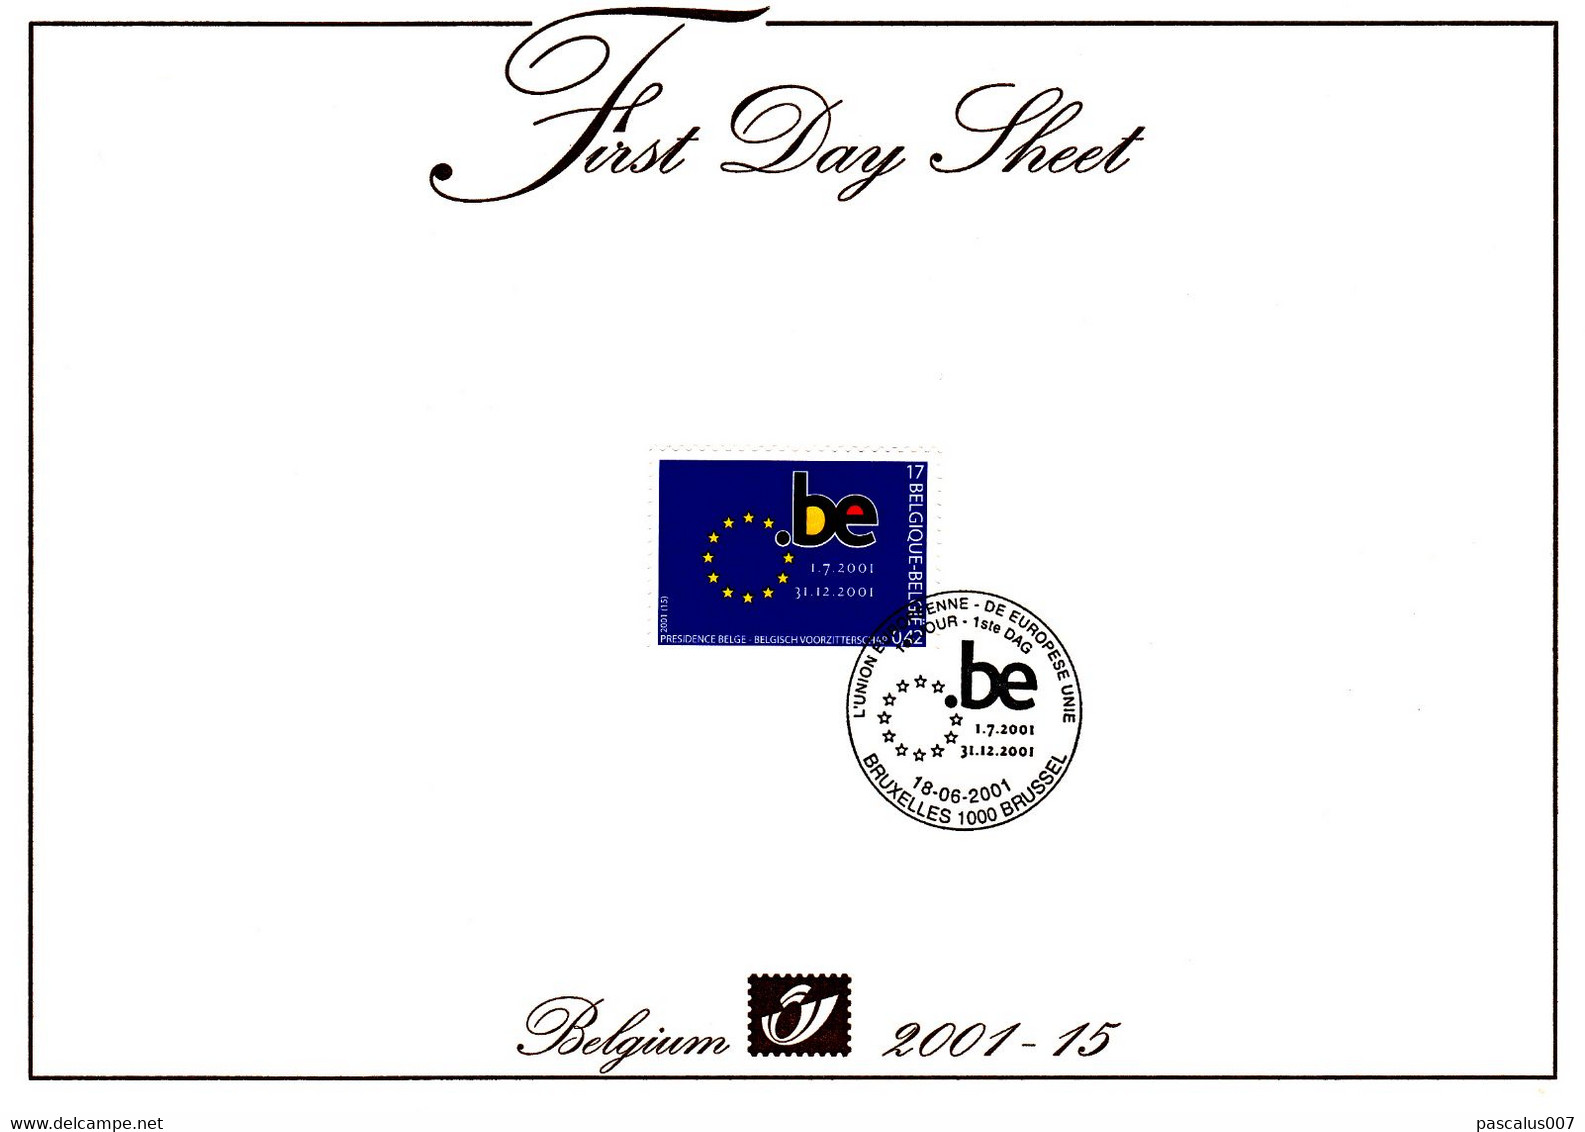 B01-223 A6 2001-15 3014 Union Européenne First Day Sheet FDS 18-6-2001 Présidence Belge European Union - 1991-2000